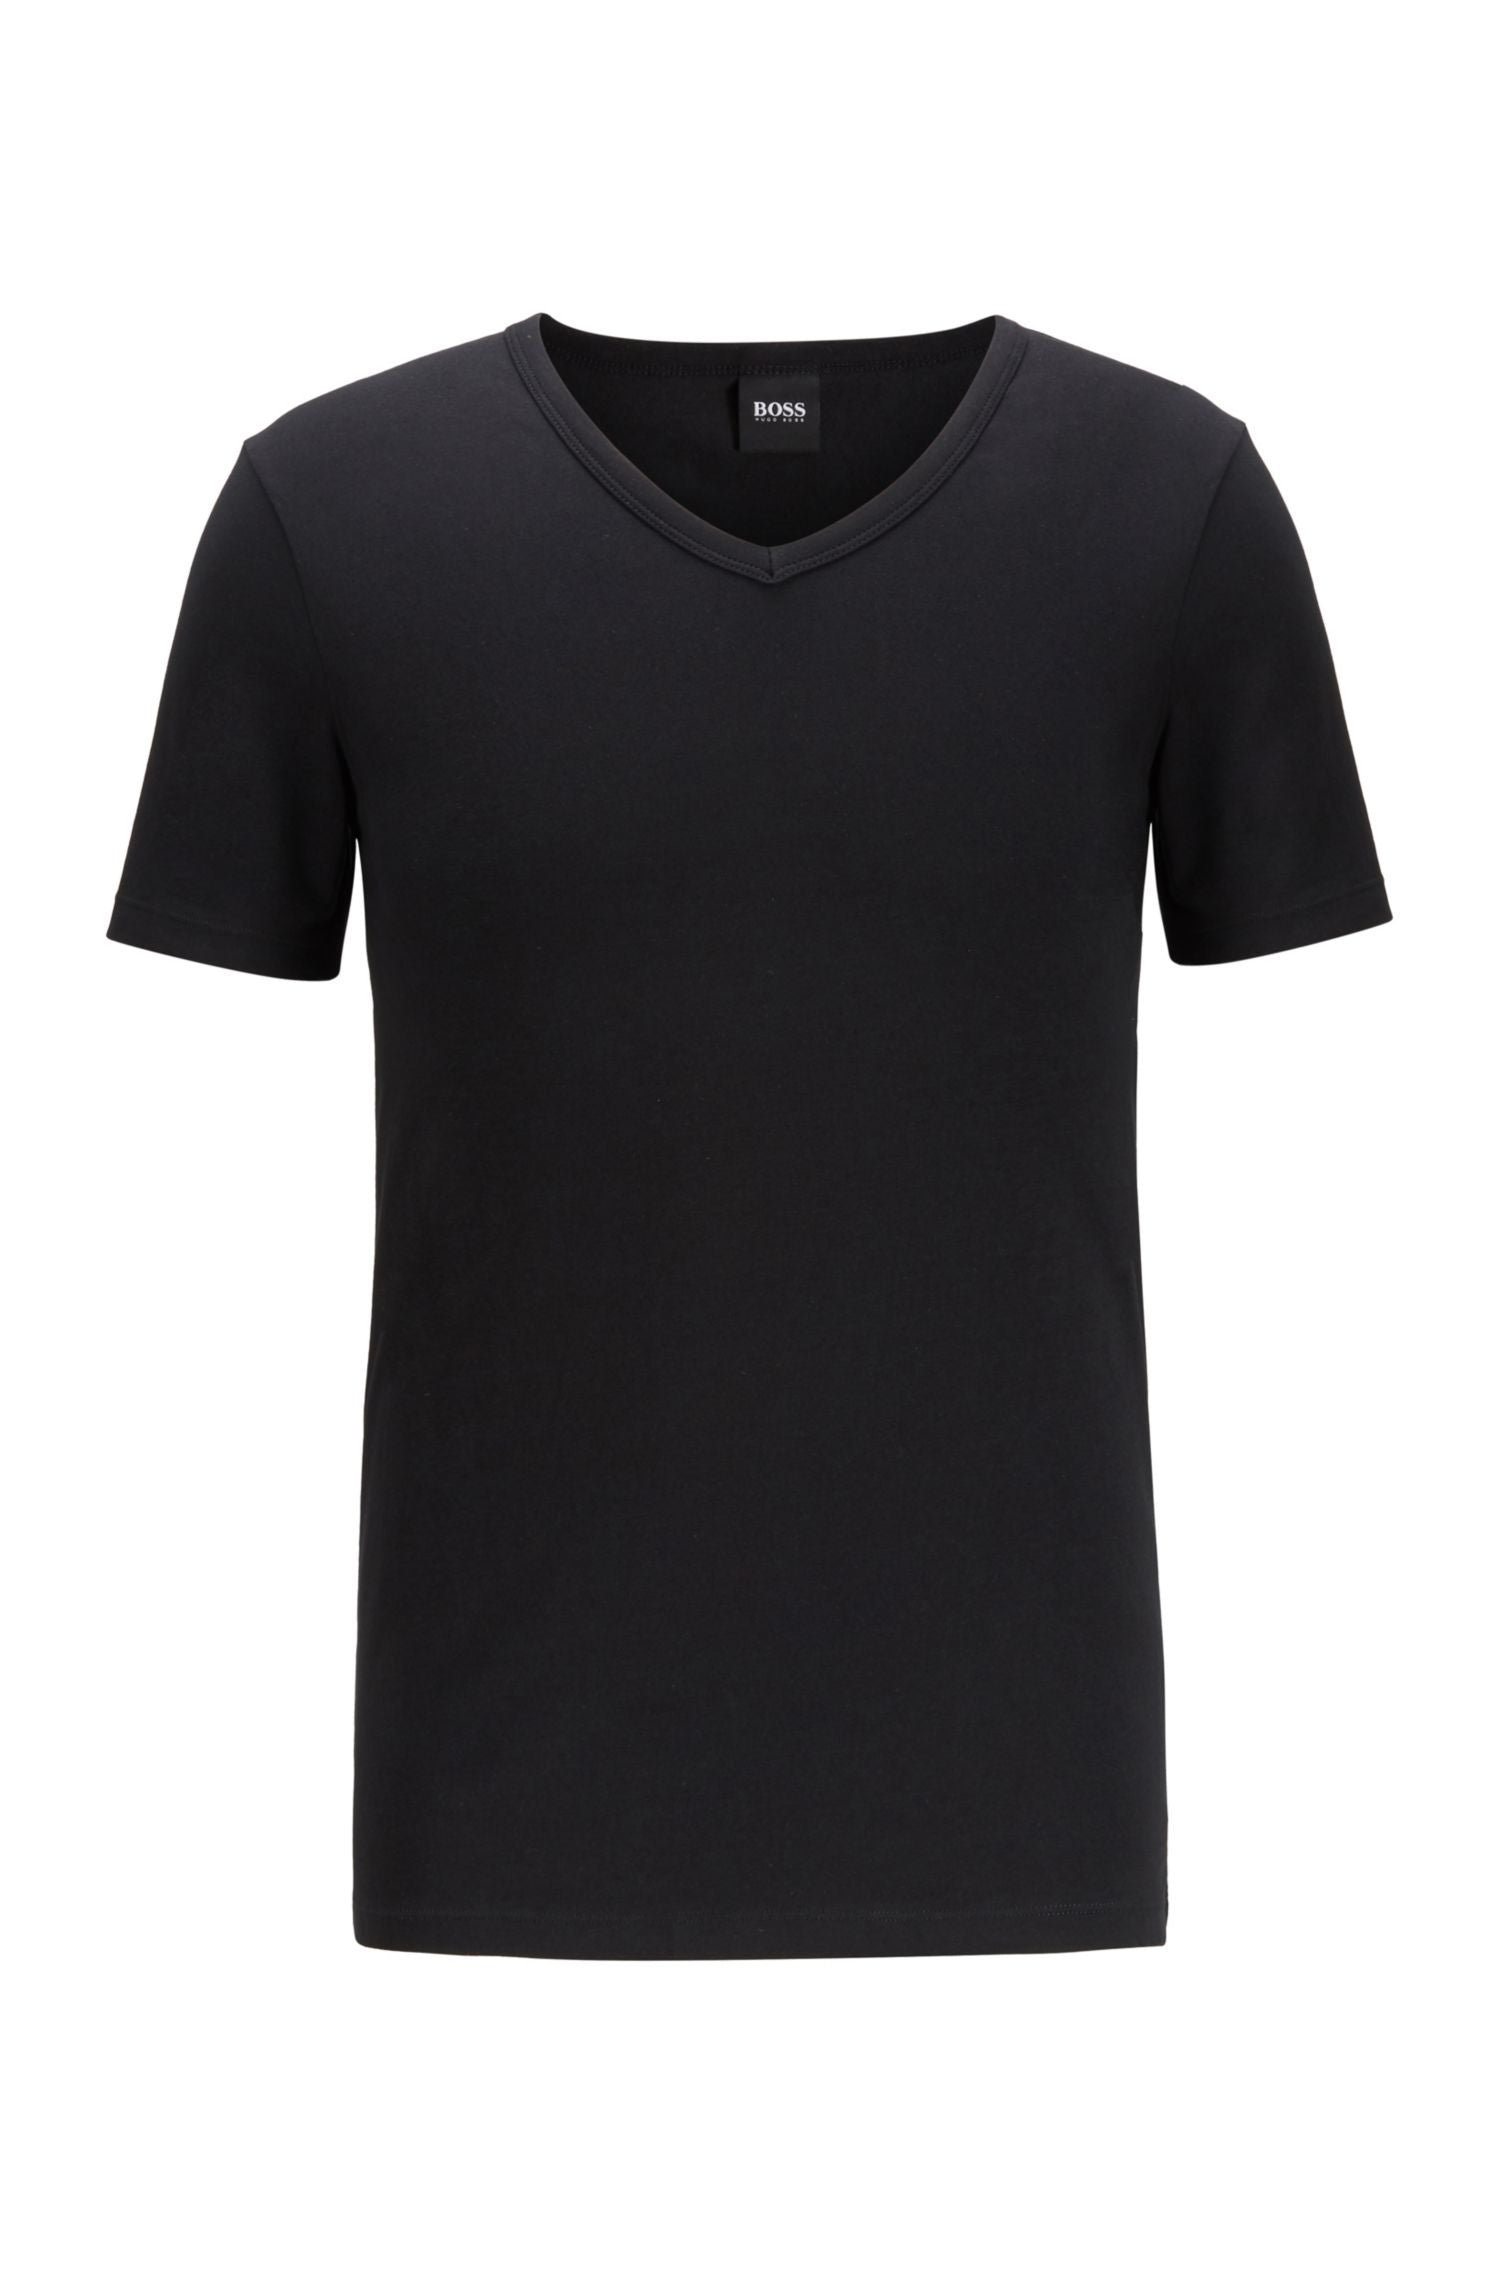 Hugo Boss Hugo Boss T-shirt Ondermode - Zwart